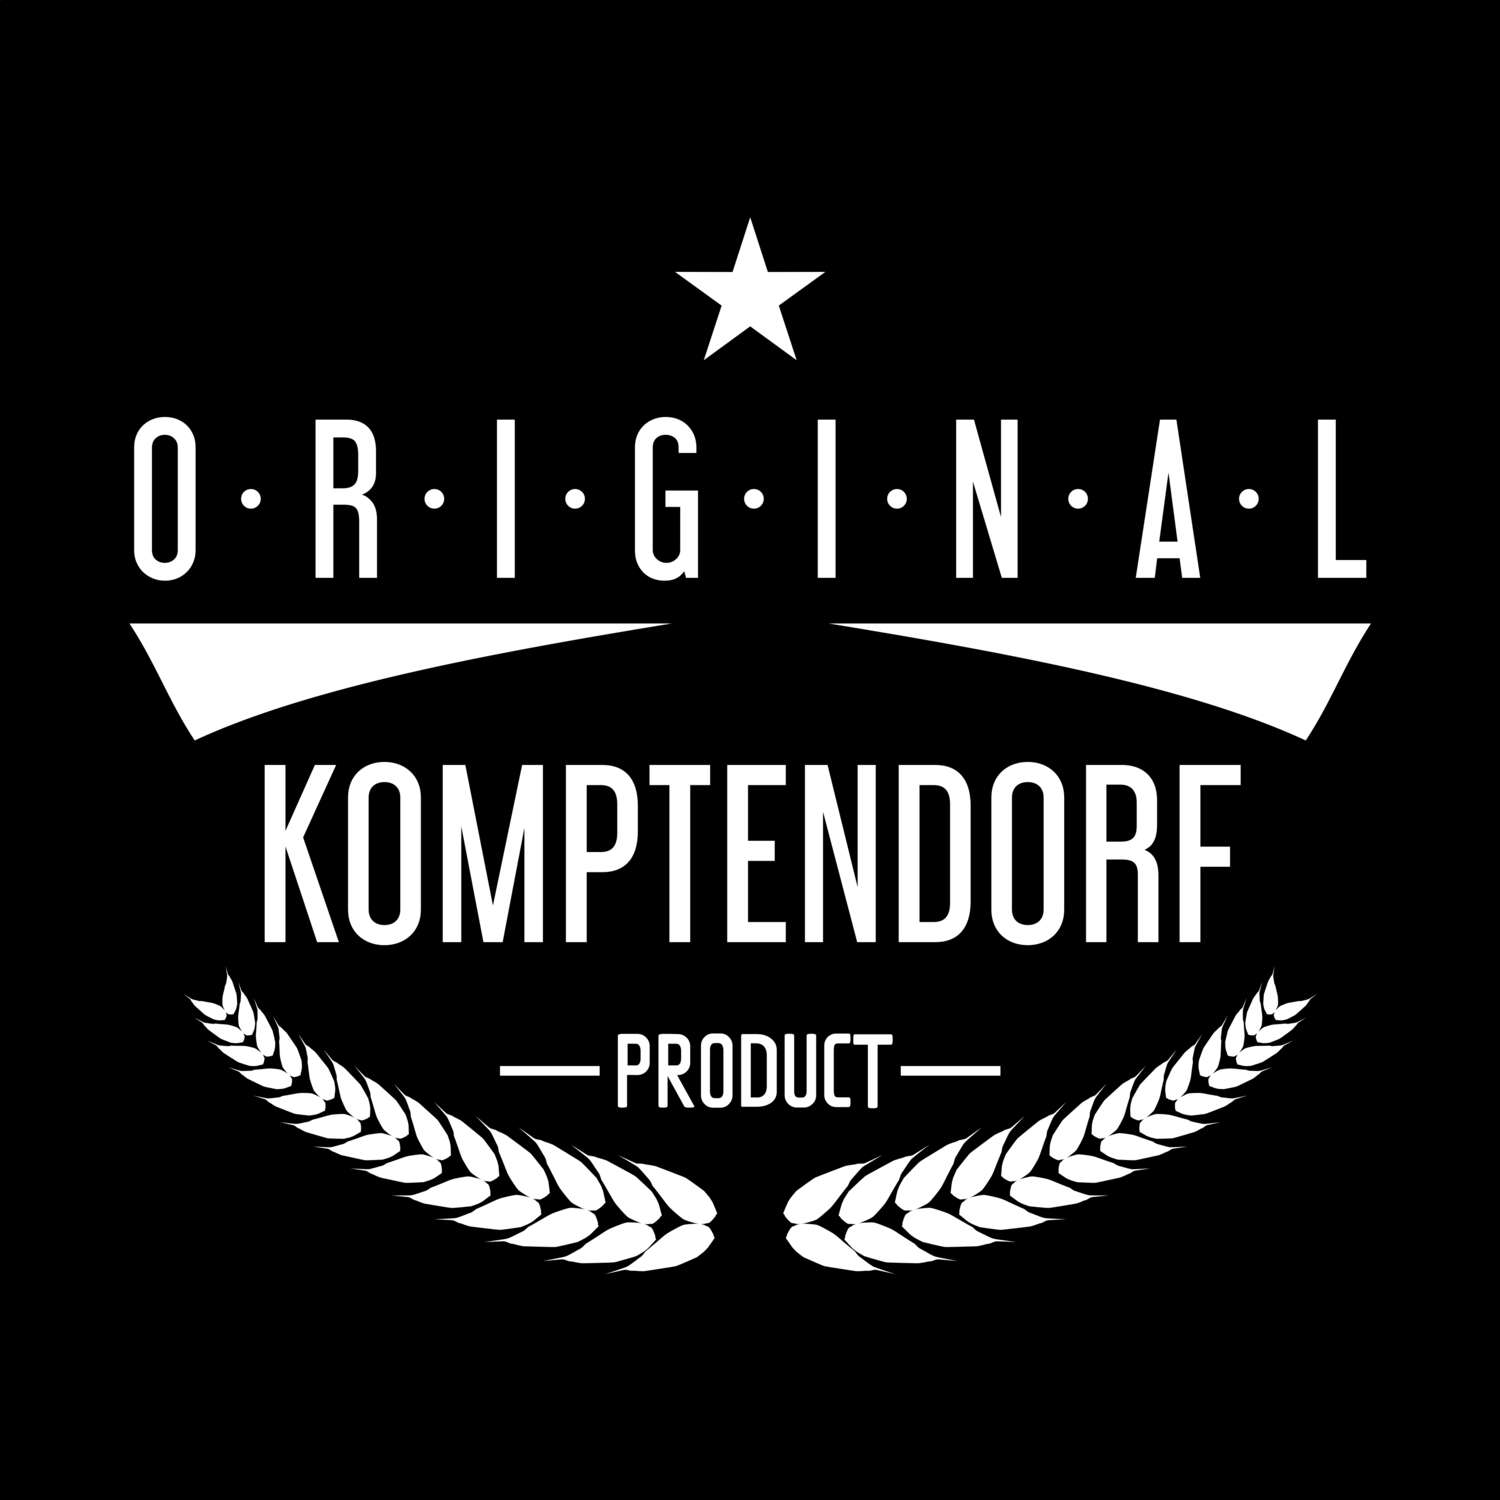 Komptendorf T-Shirt »Original Product«